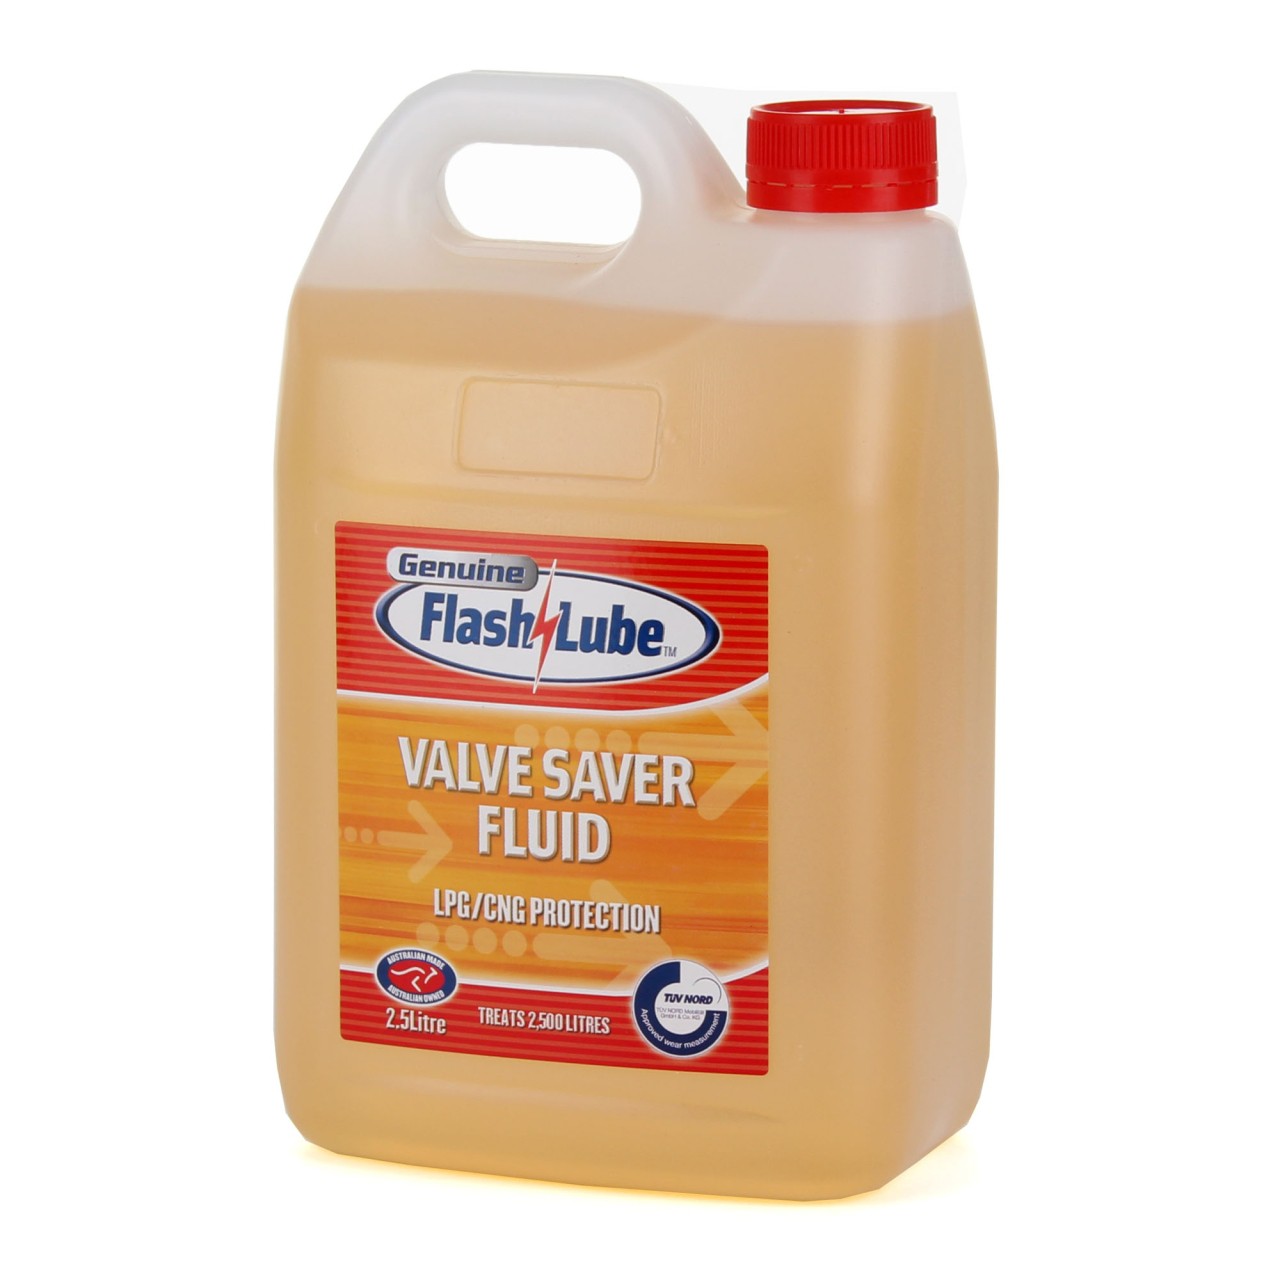 2.5 Liter flashlube valve saver fluid FV2.5L 9316889001030 LPG/CNG Protection